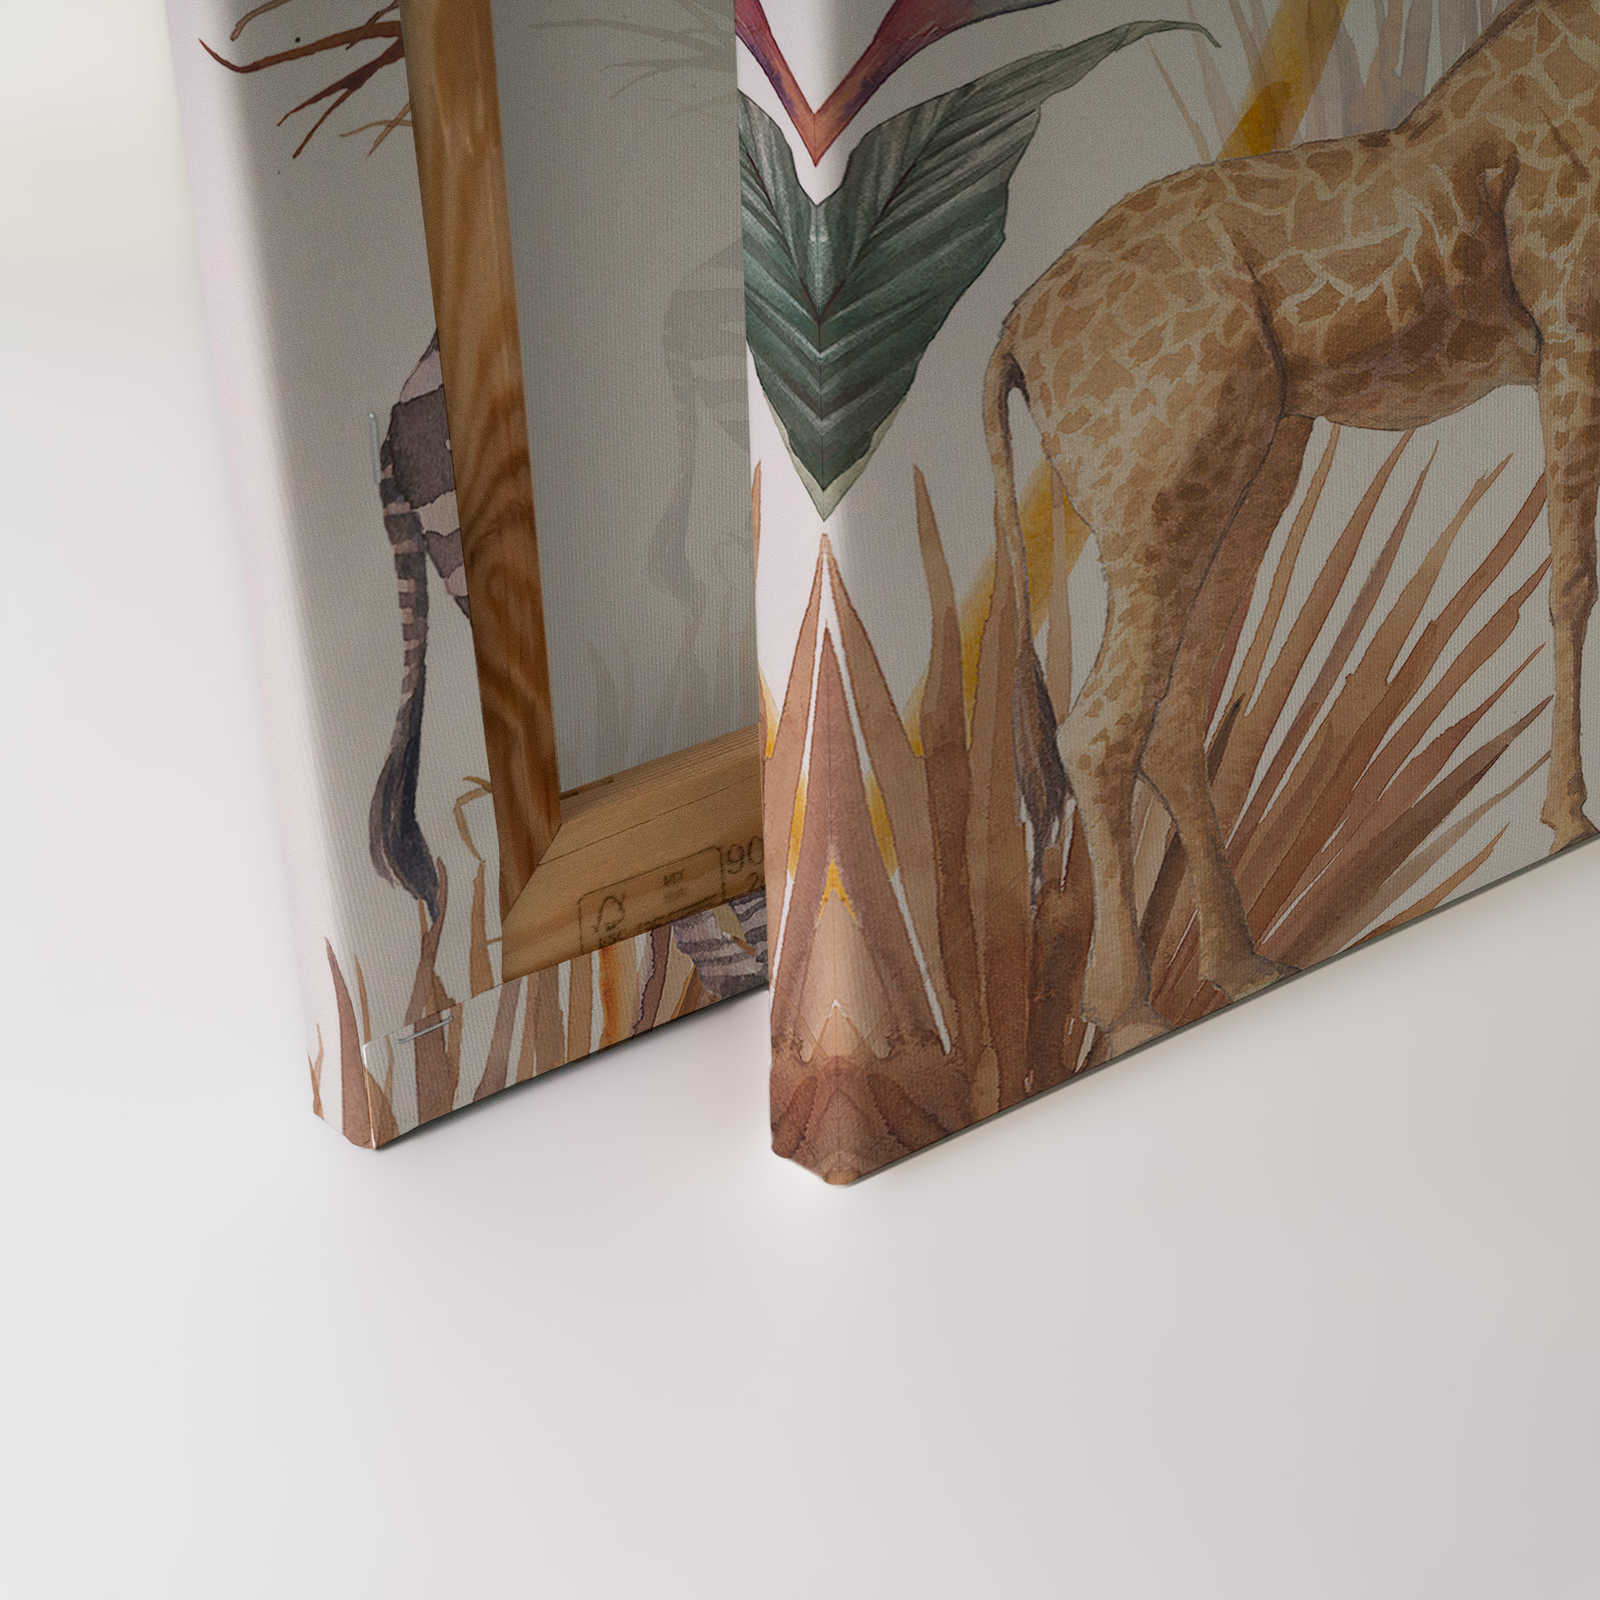             Cuadro en lienzo con sabana africana para niños - 0,90 m x 0,60 m
        